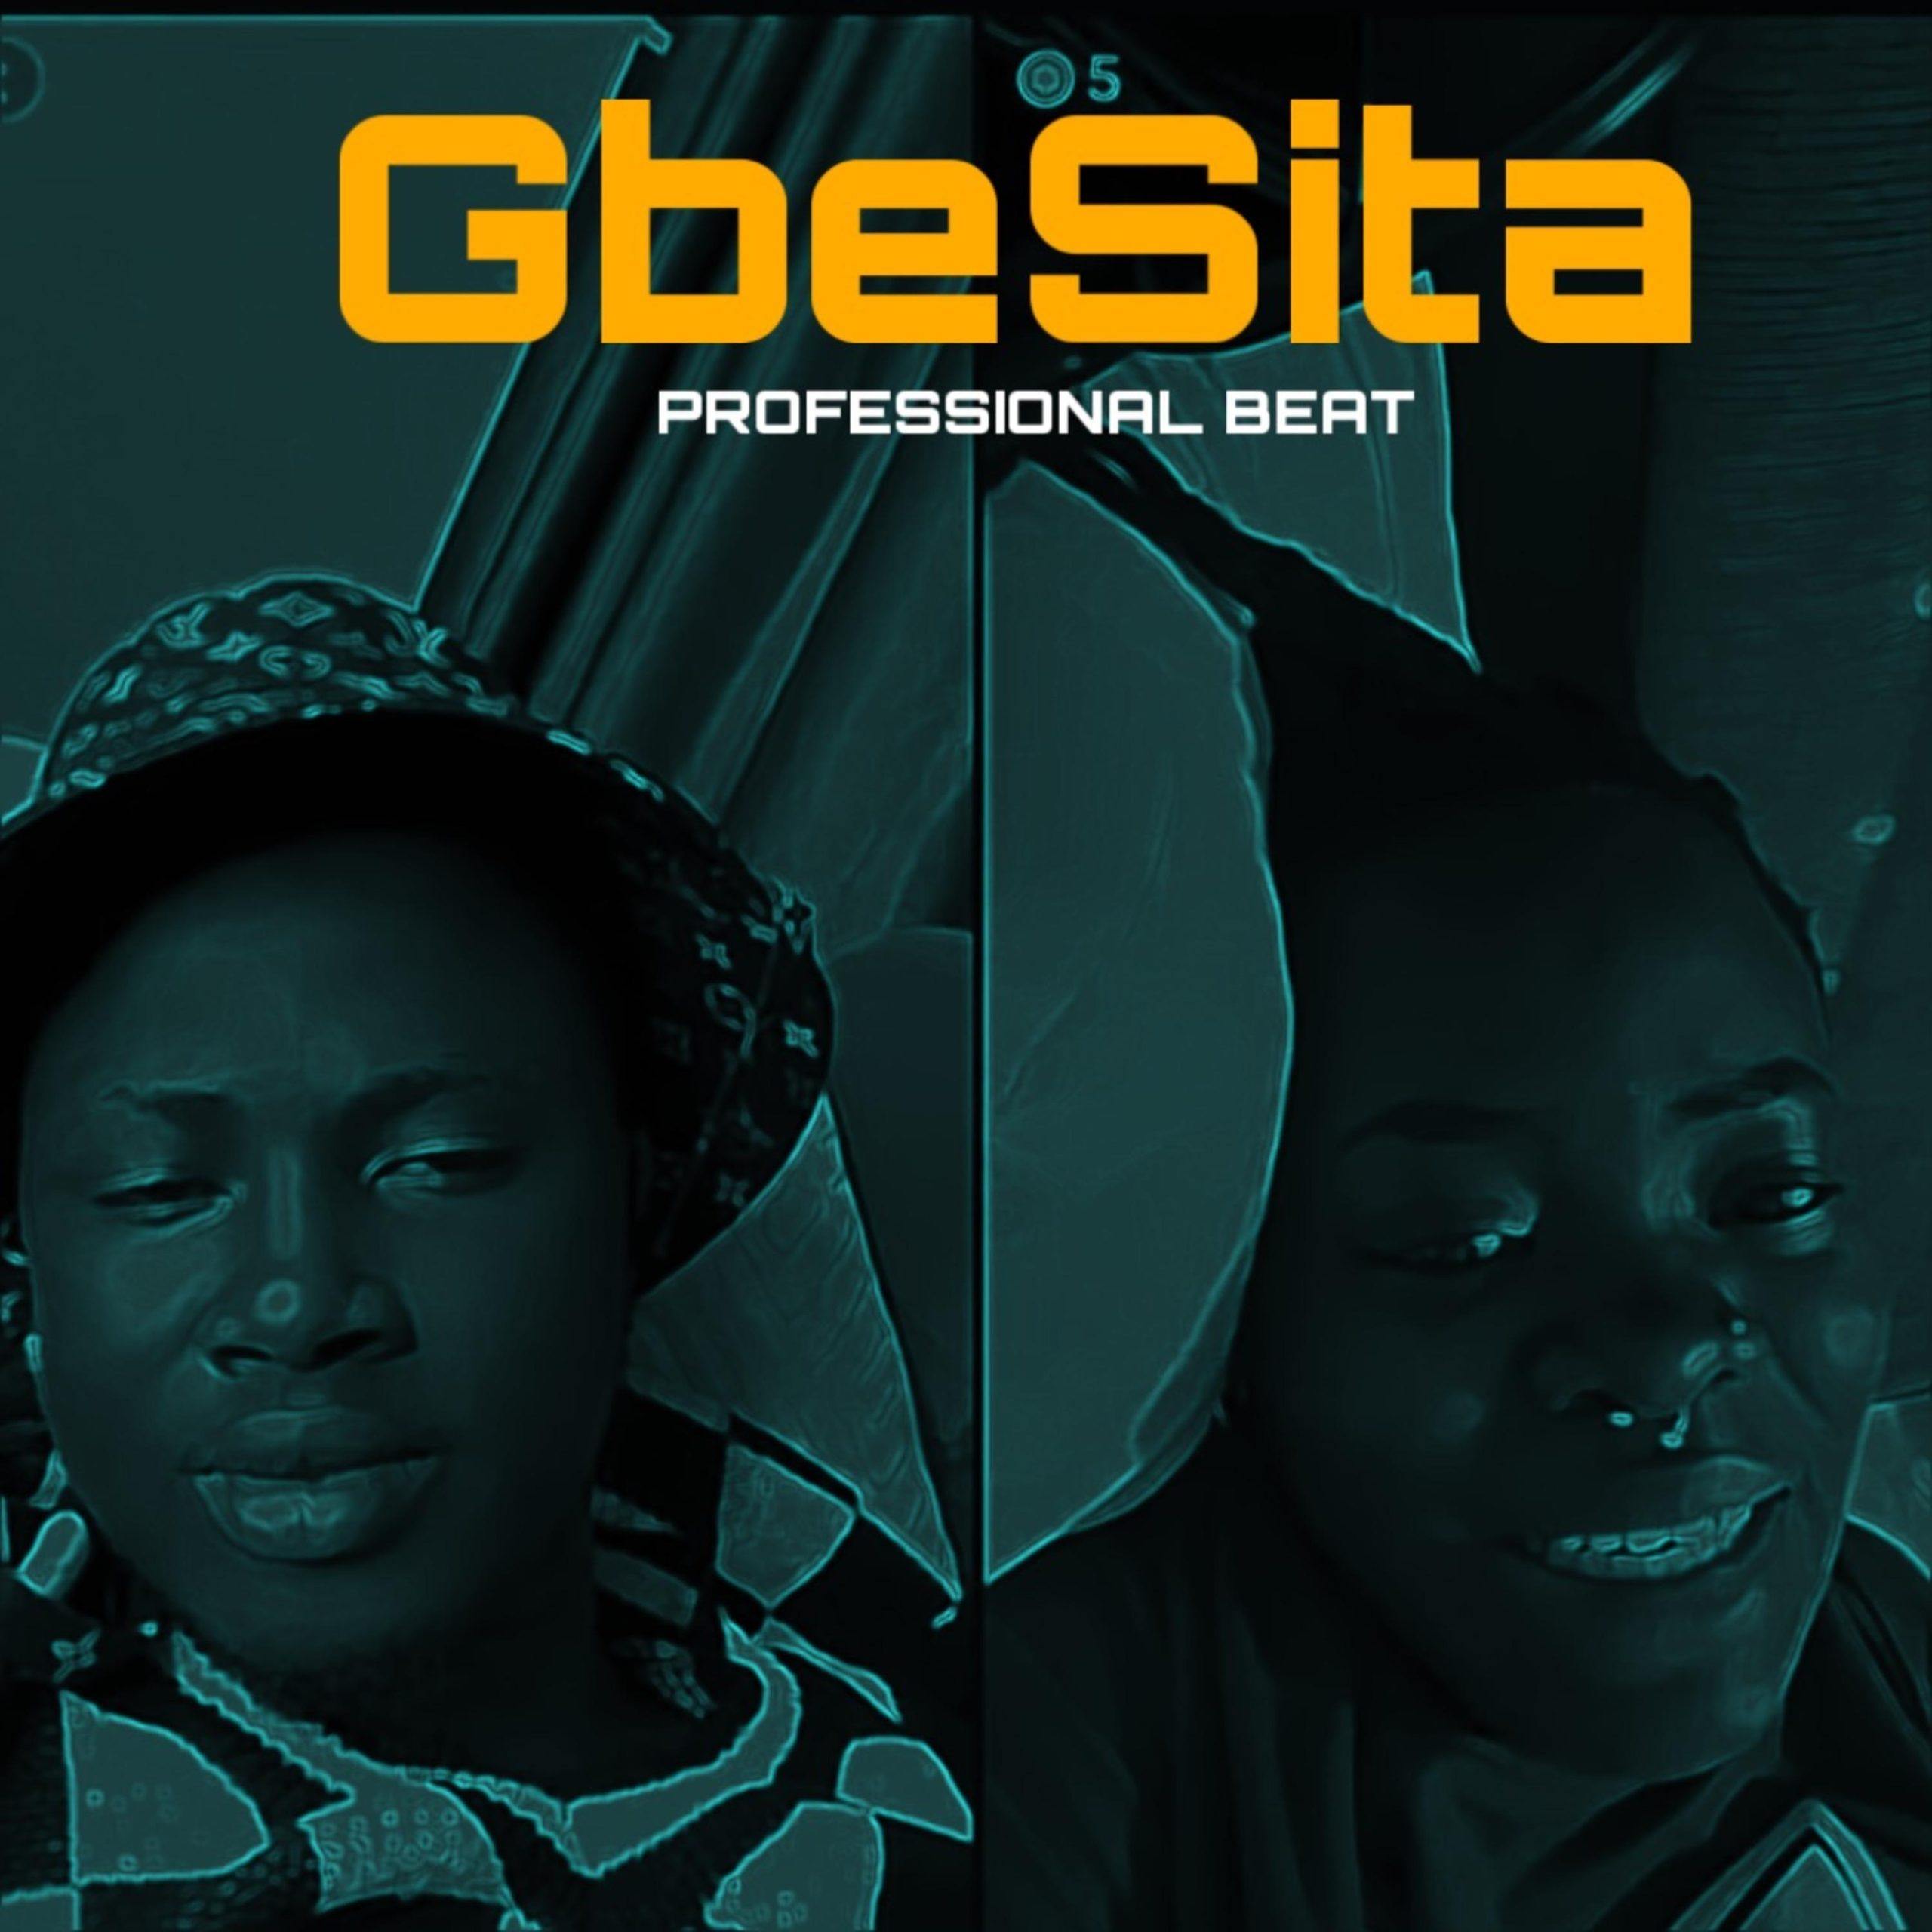 Professional Beat Gbesita scaled